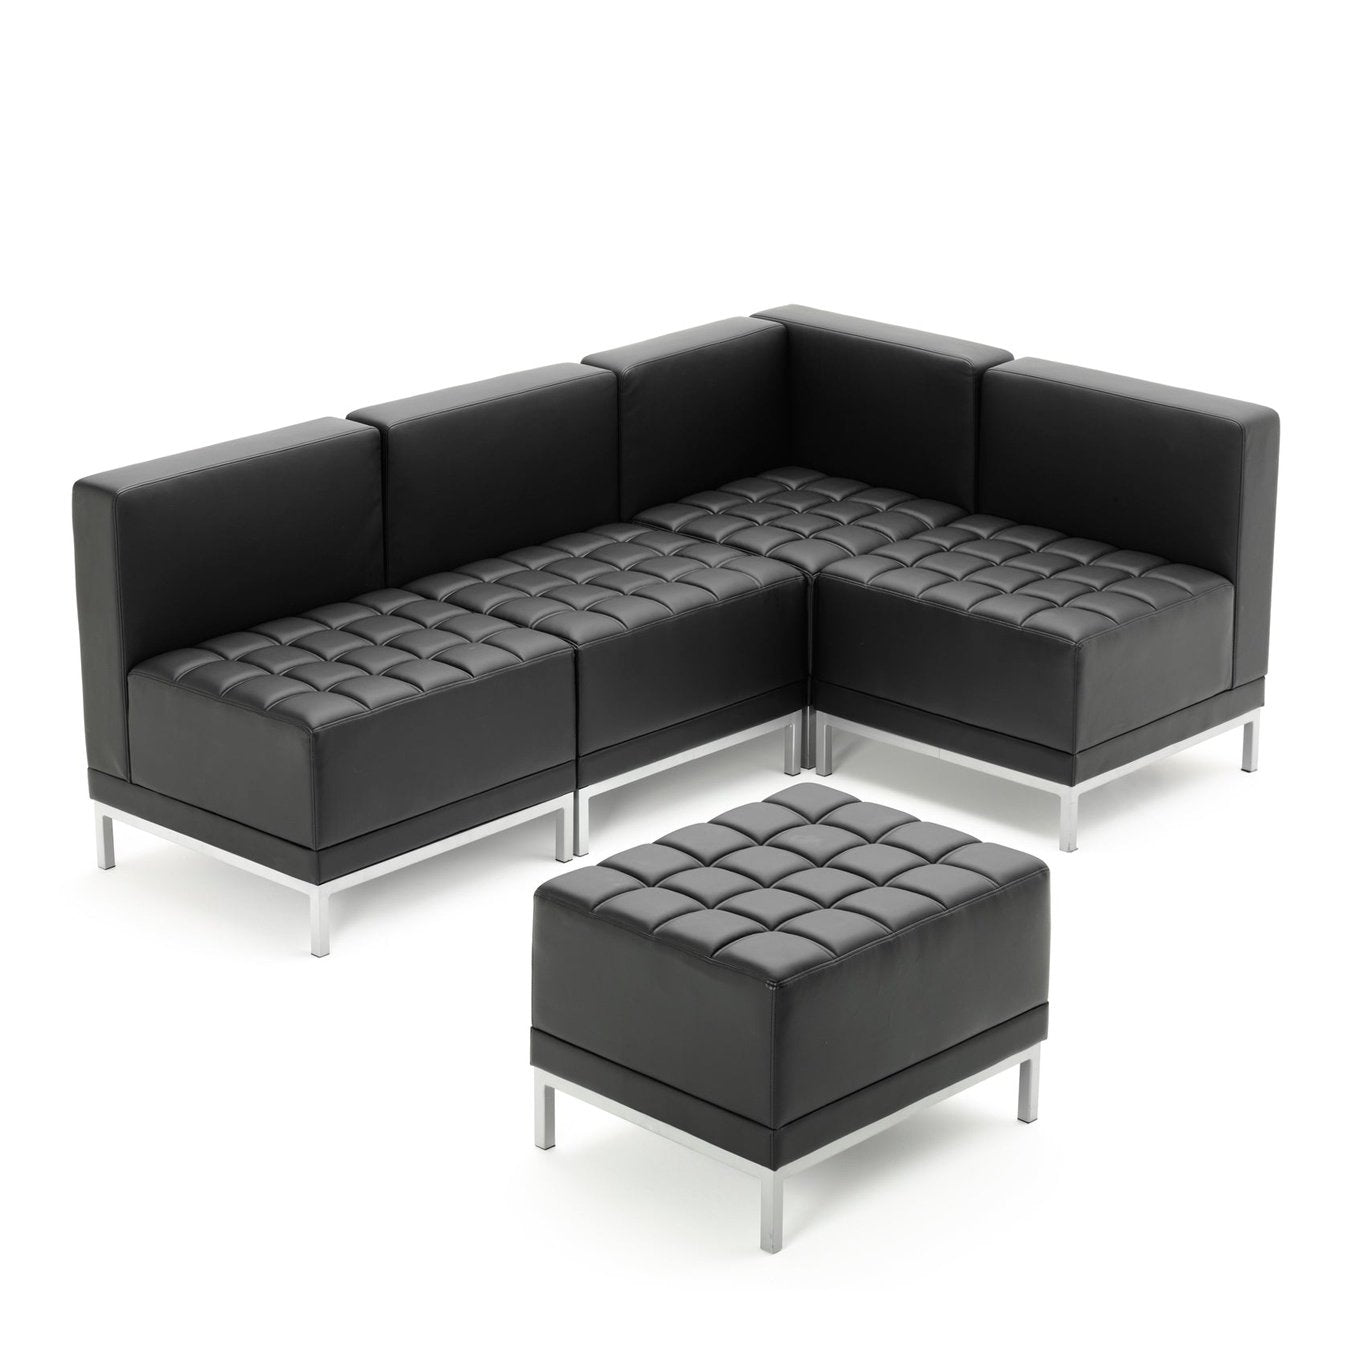 Infinity Modular Corner Unit Sofa Chair - Soft Bonded Leather, Chrome Metal Frame, Pre-Assembled, 150kg Capacity, 5hr Usage, 2yr Guarantee